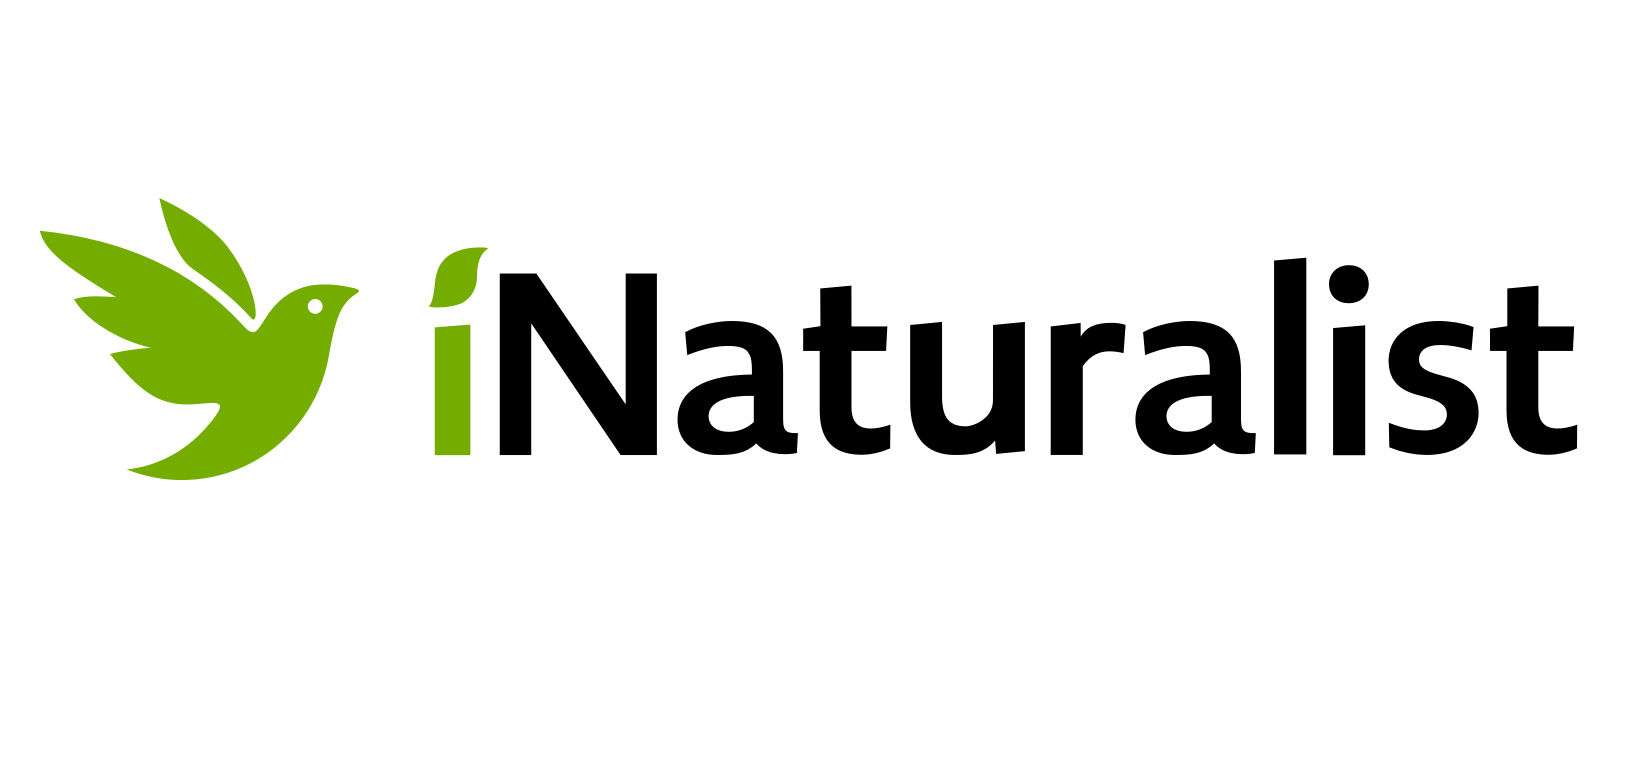 Naturalist forge. INATURALIST. INATURALIST натуралист. Натуралист логотип. Лого INATURALIST, Planetnet.